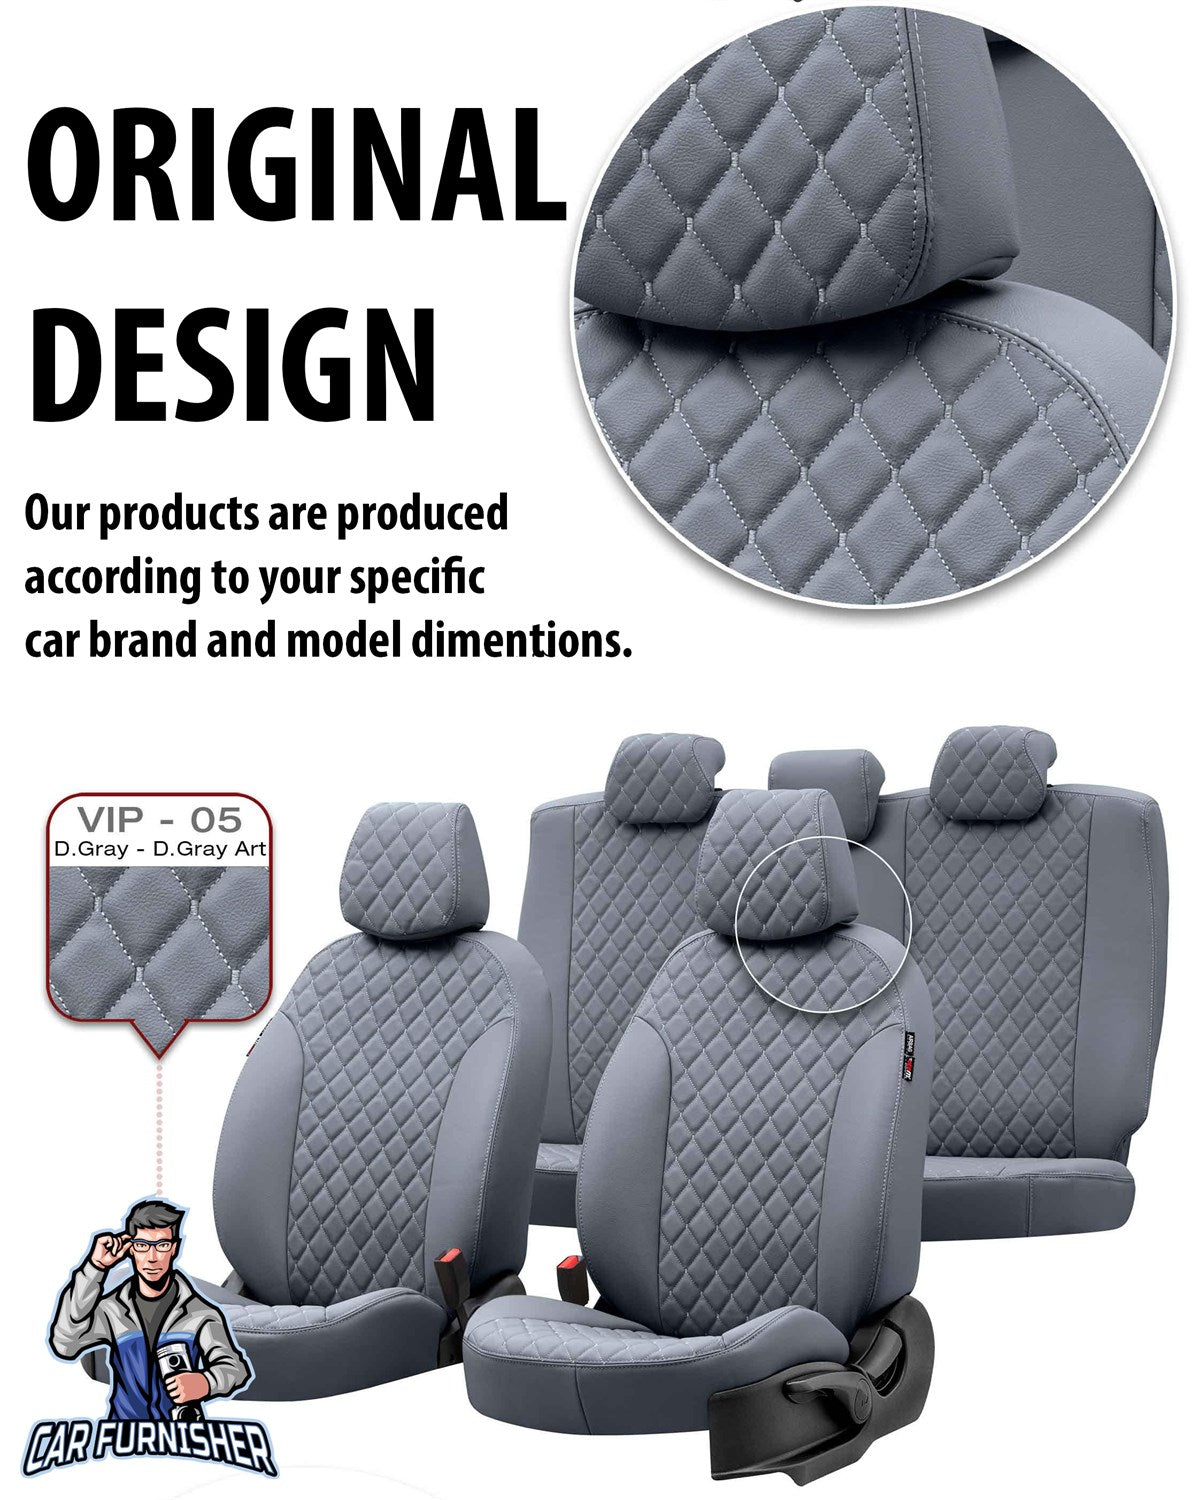 Kia Cerato Seat Covers Madrid Leather Design Dark Red Leather